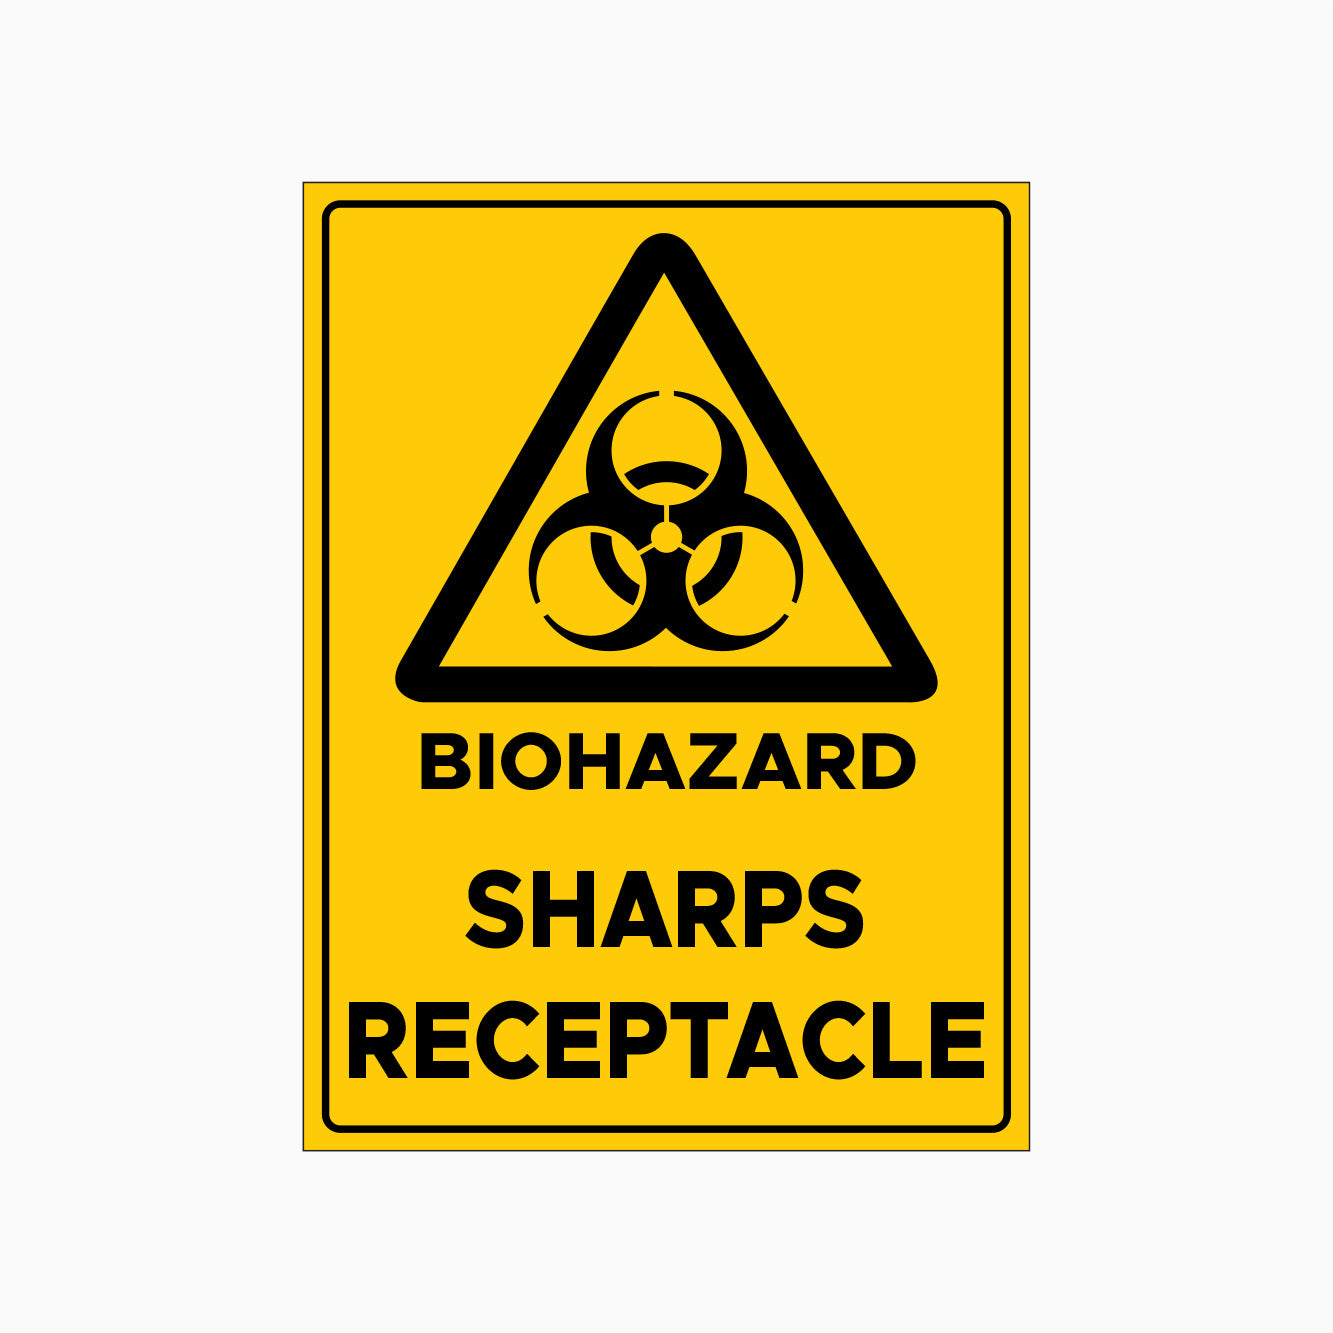 BIOHAZARD SHARPS RECEPTACLE SIGN